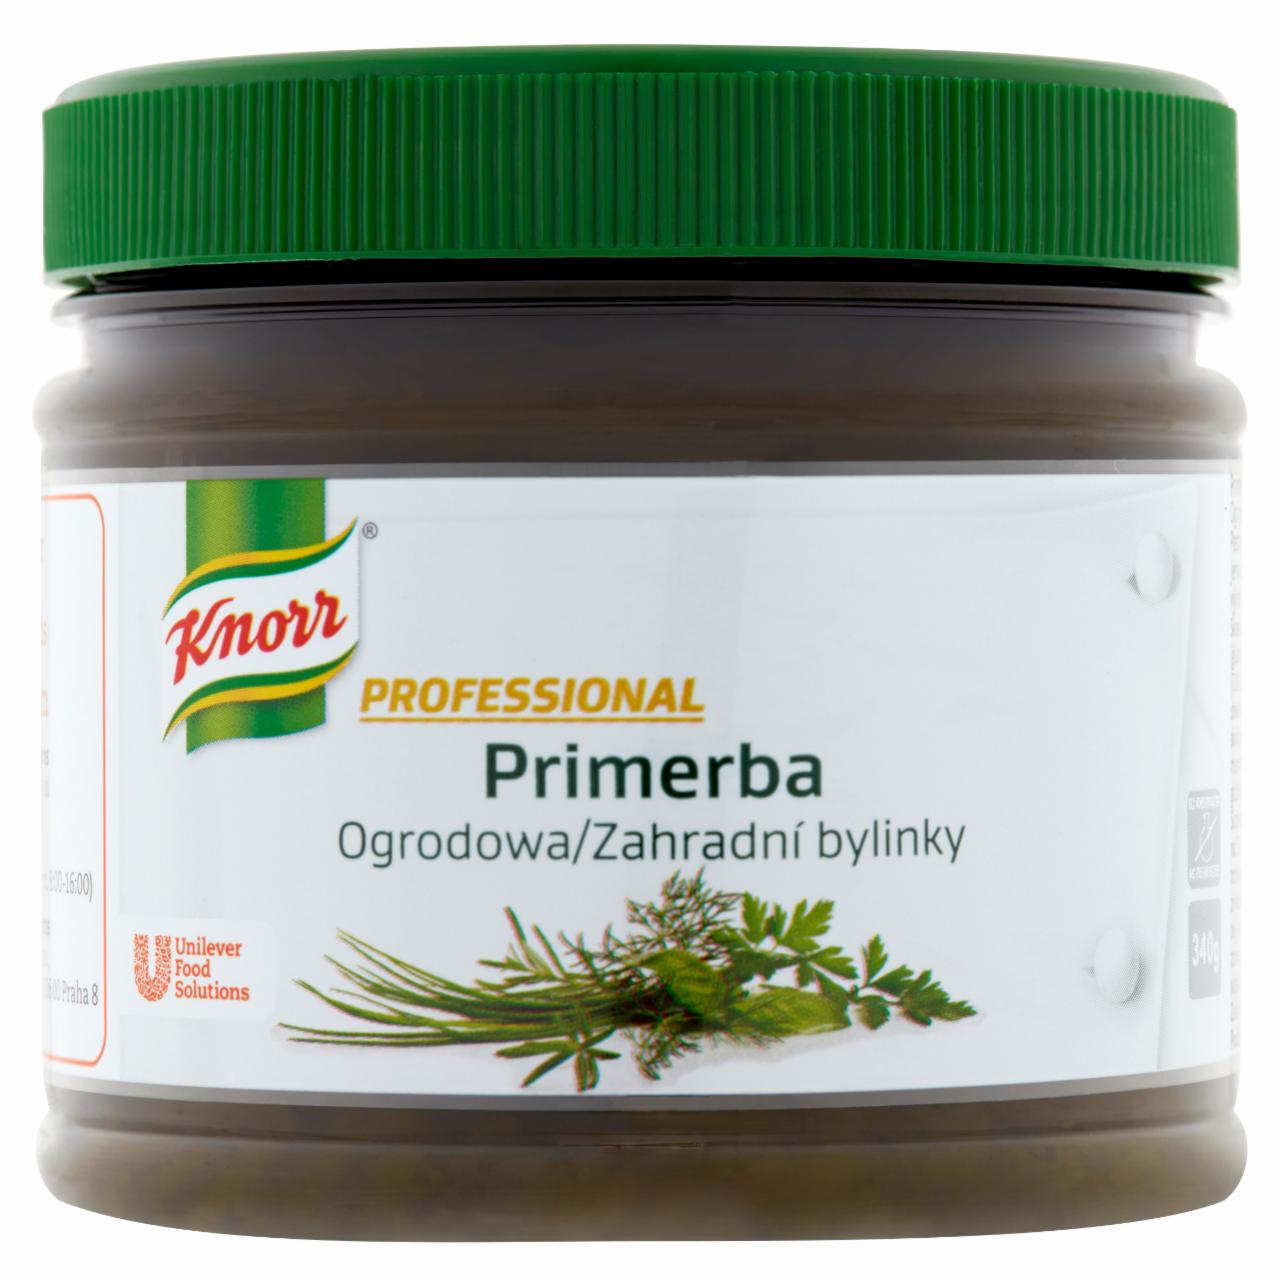 Photo - Knorr Professional Garden Primerba Herbal Paste Seasoning 340 g